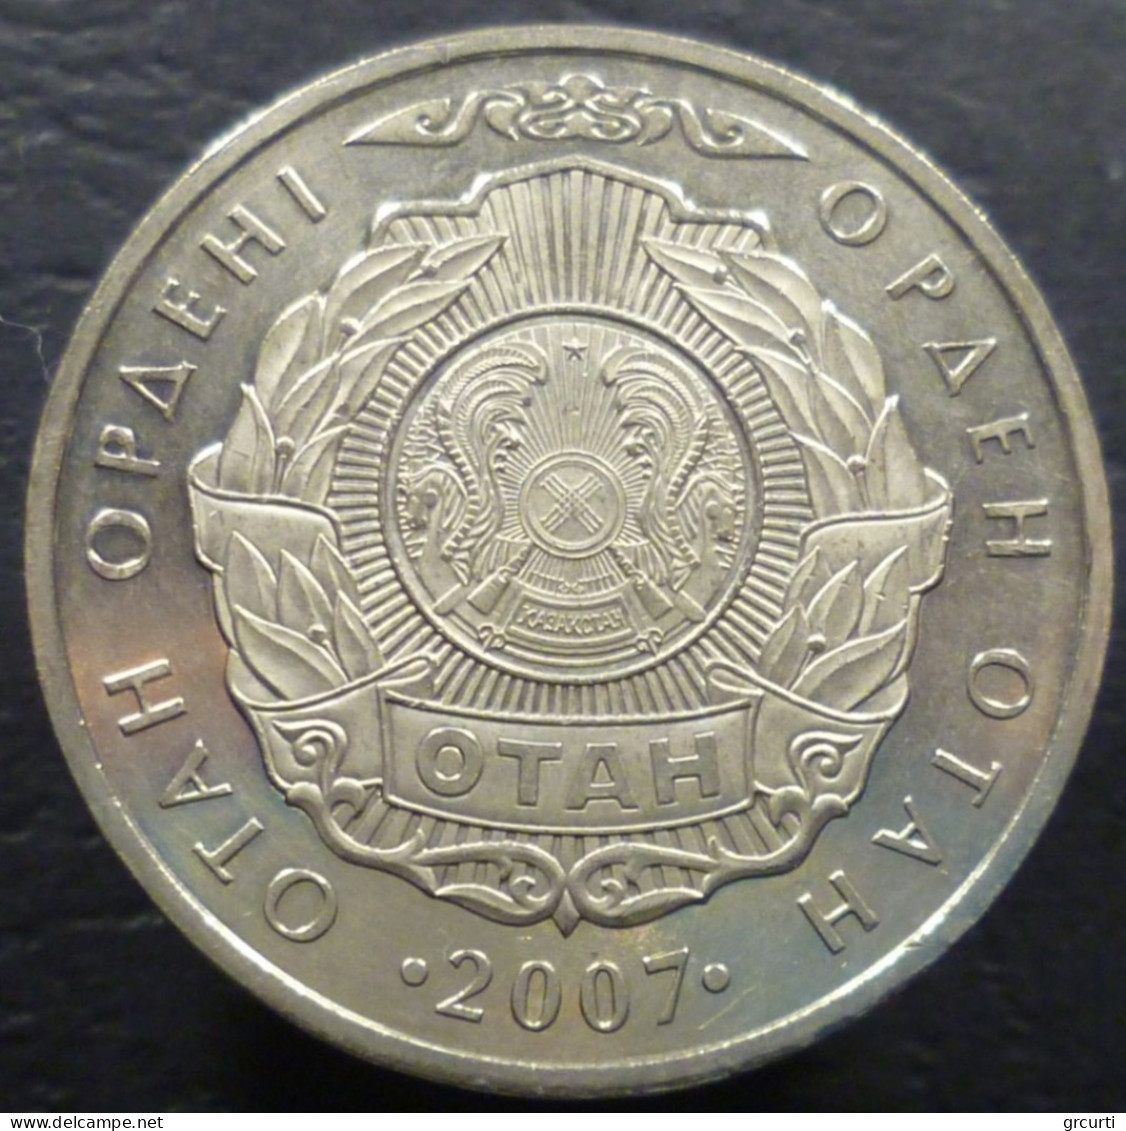 Kazakistan - 50 Tenge 2007 - Serie D'onorificenze - Ordine Della Patria (Отан ордені) - KM# 165 - Kasachstan